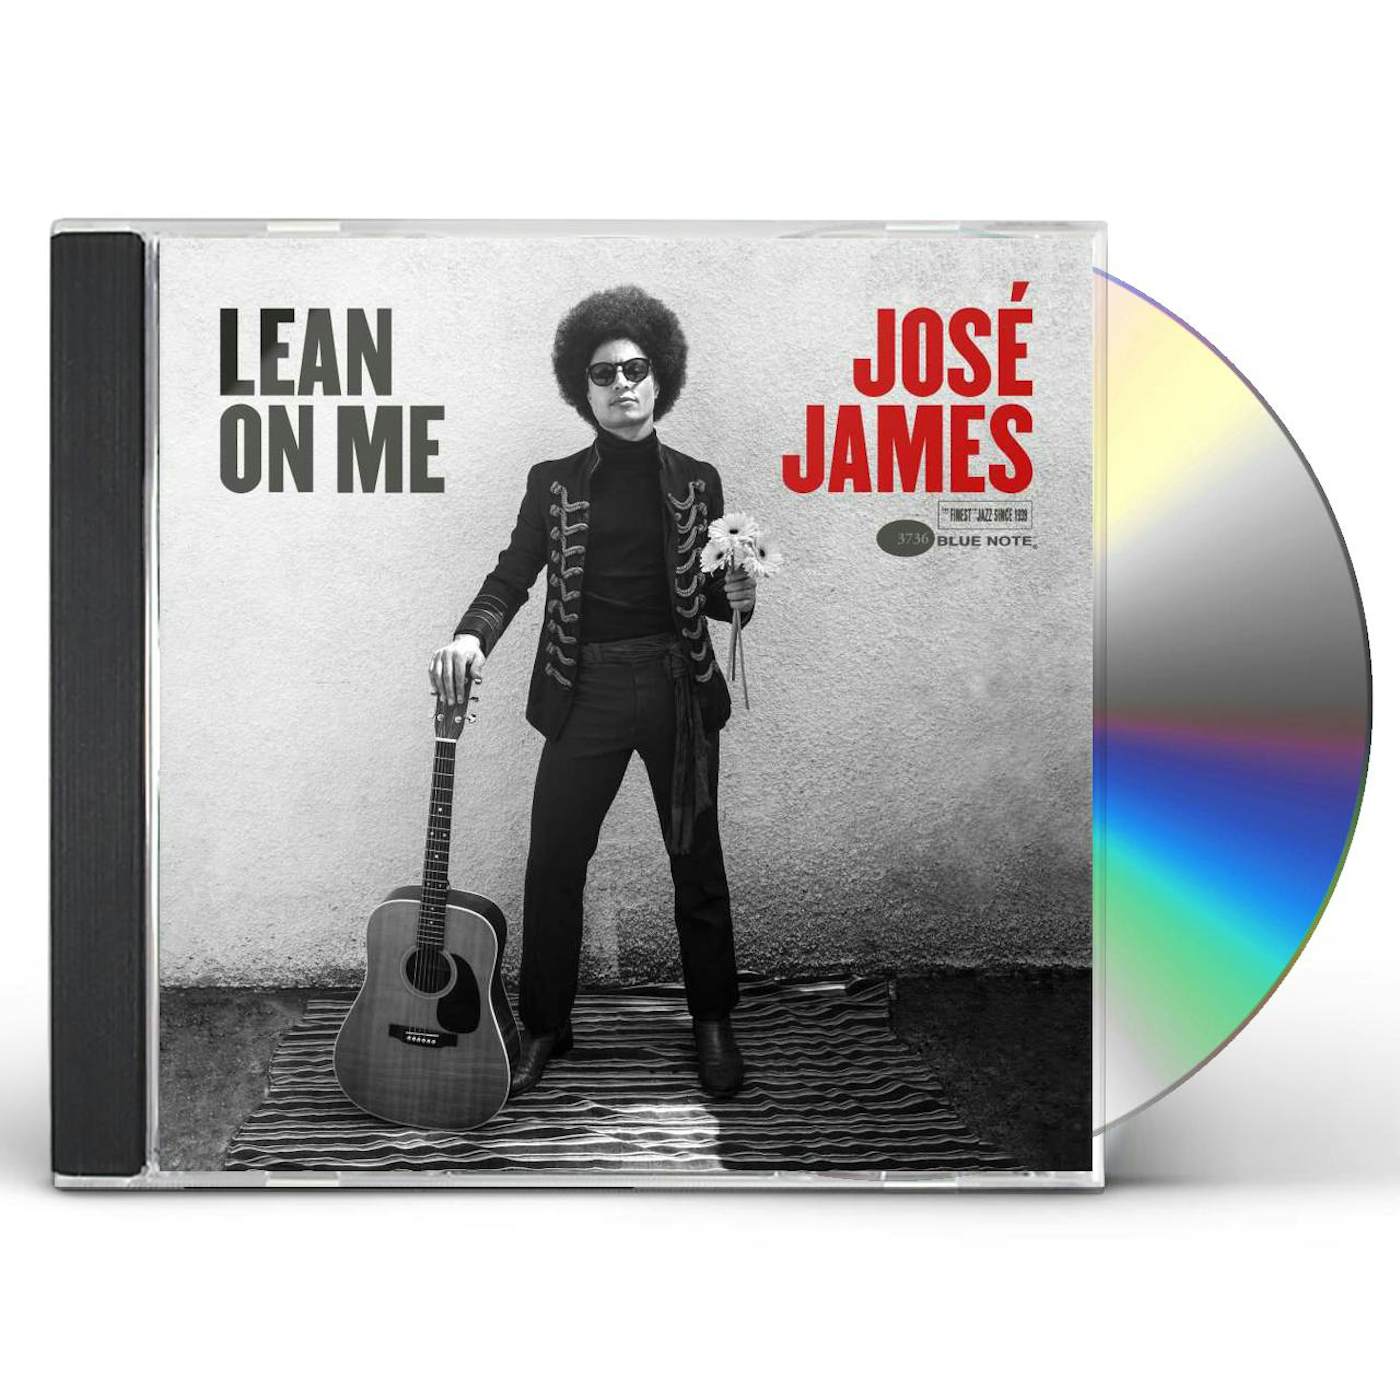 Jose James Lean On Me CD